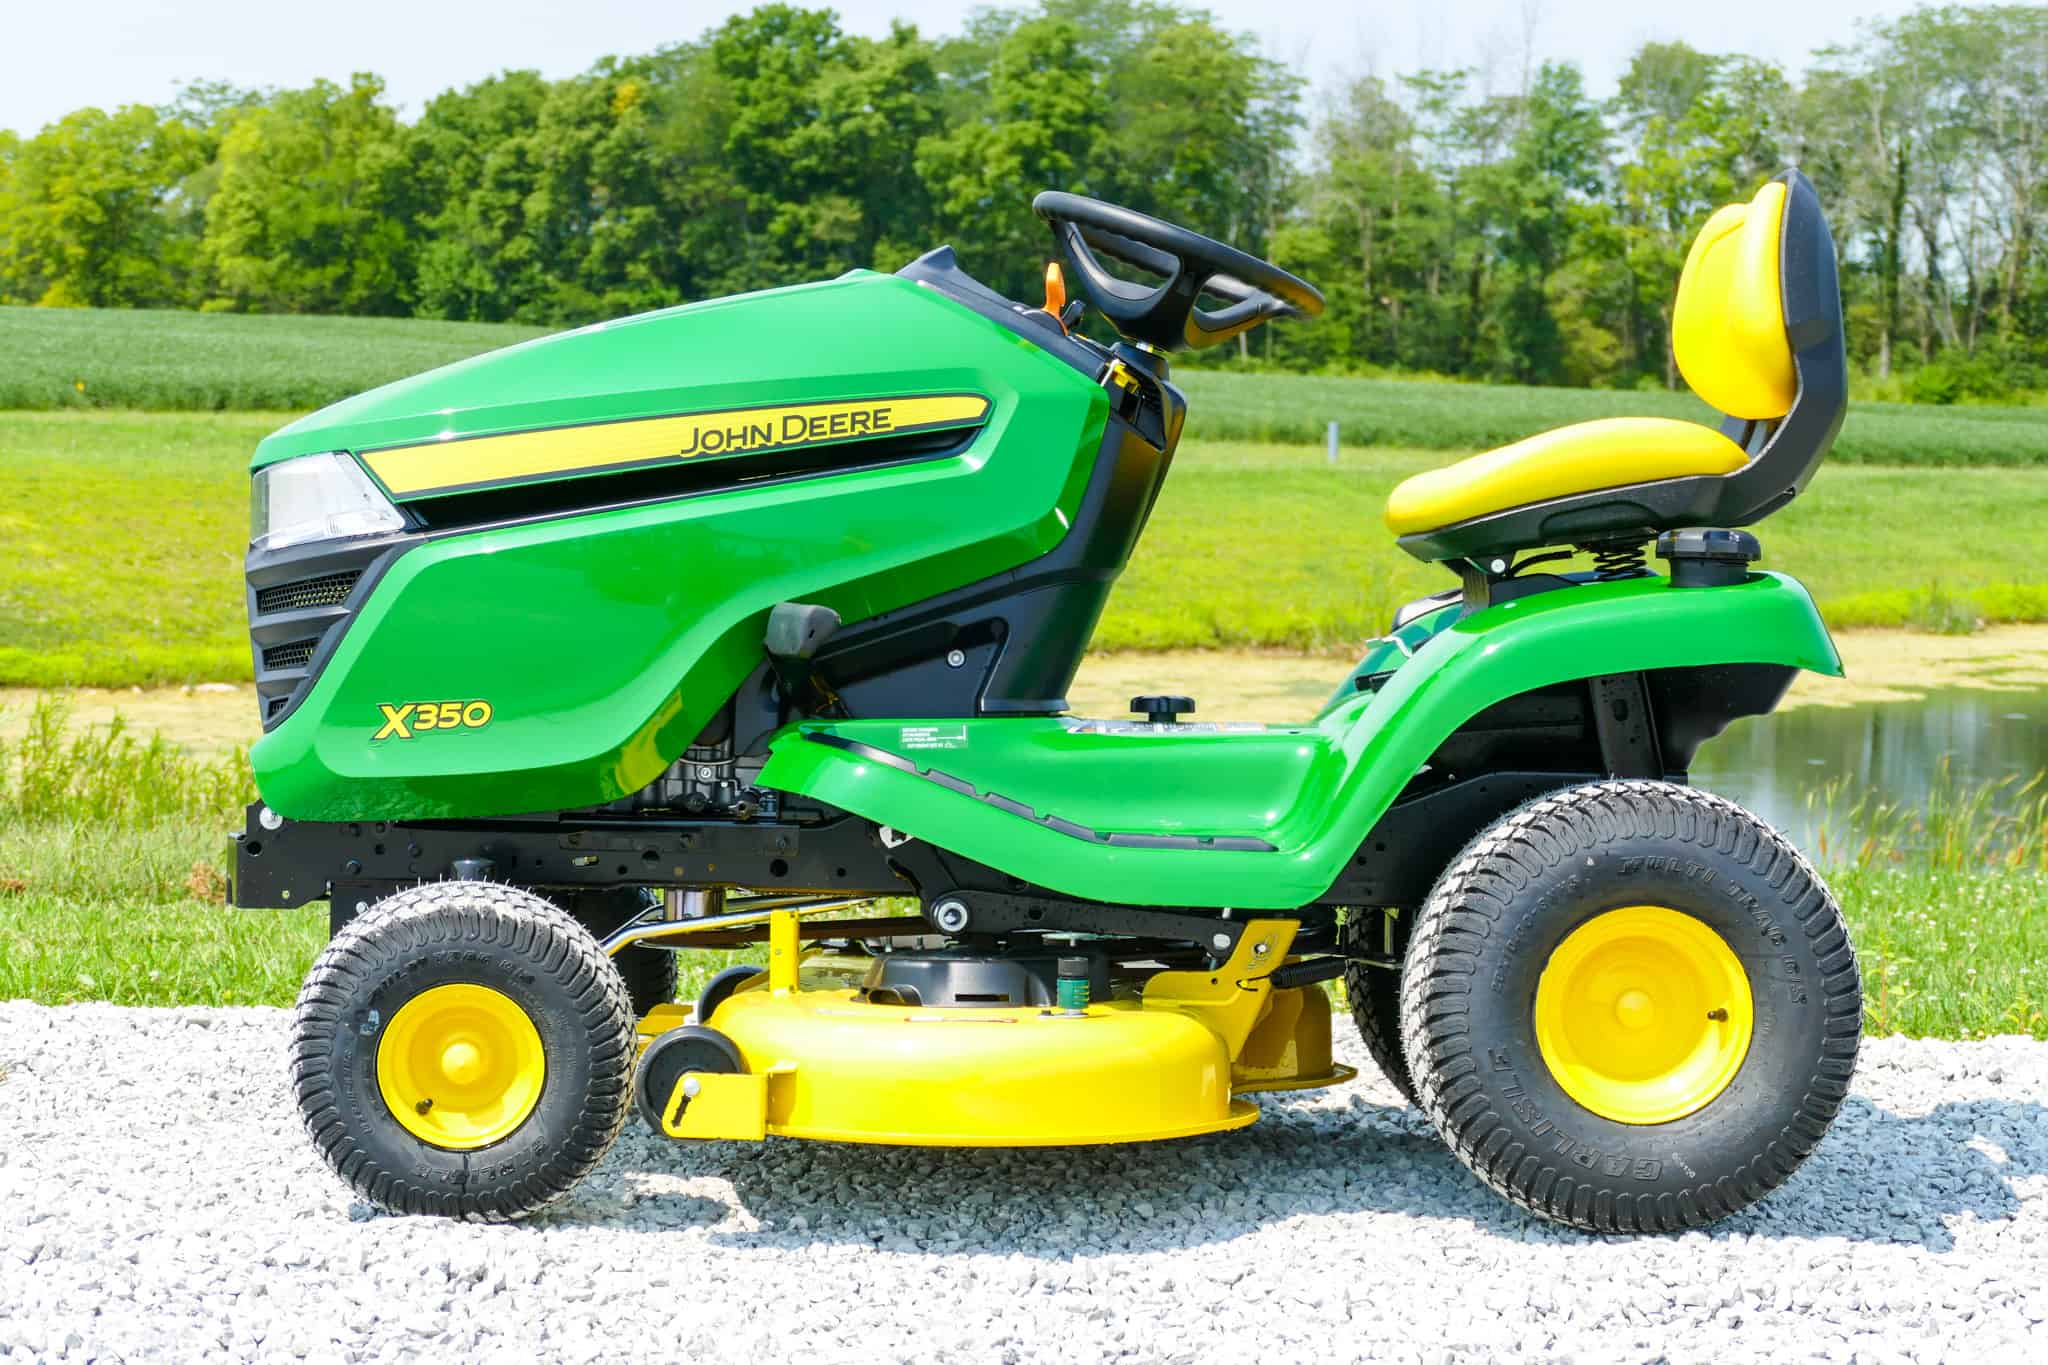 John Deere X350 Lawn Tractor Review & Specs